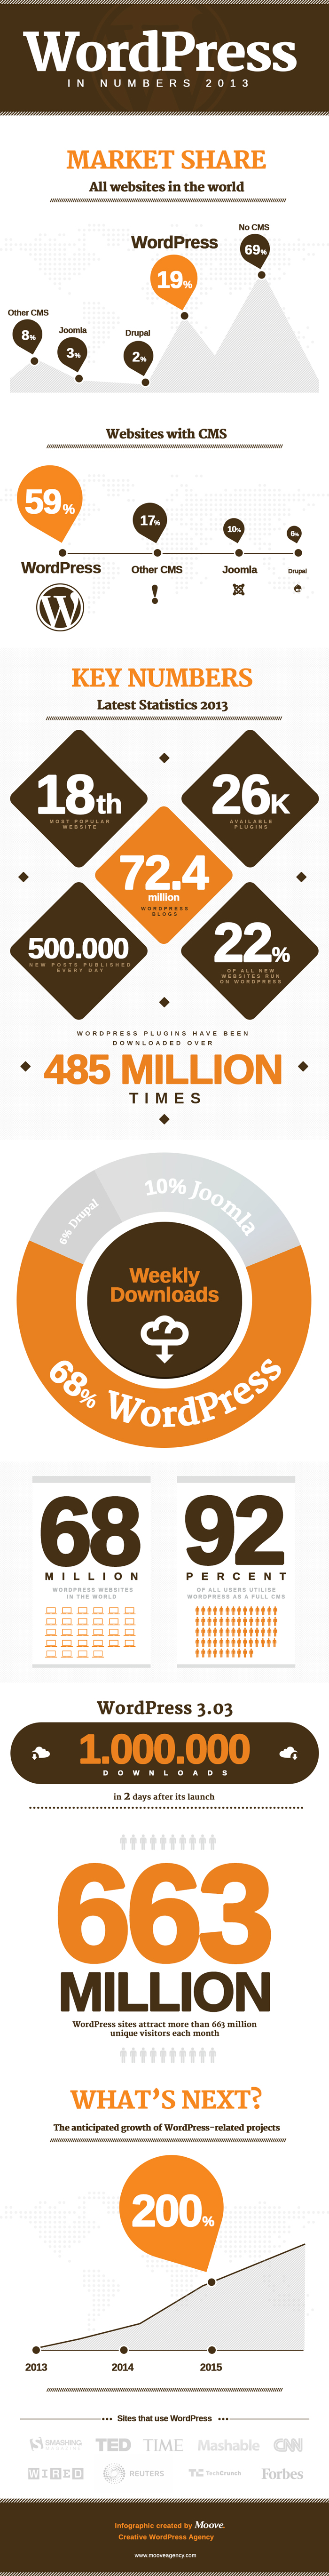 WordPress Infographic 2013